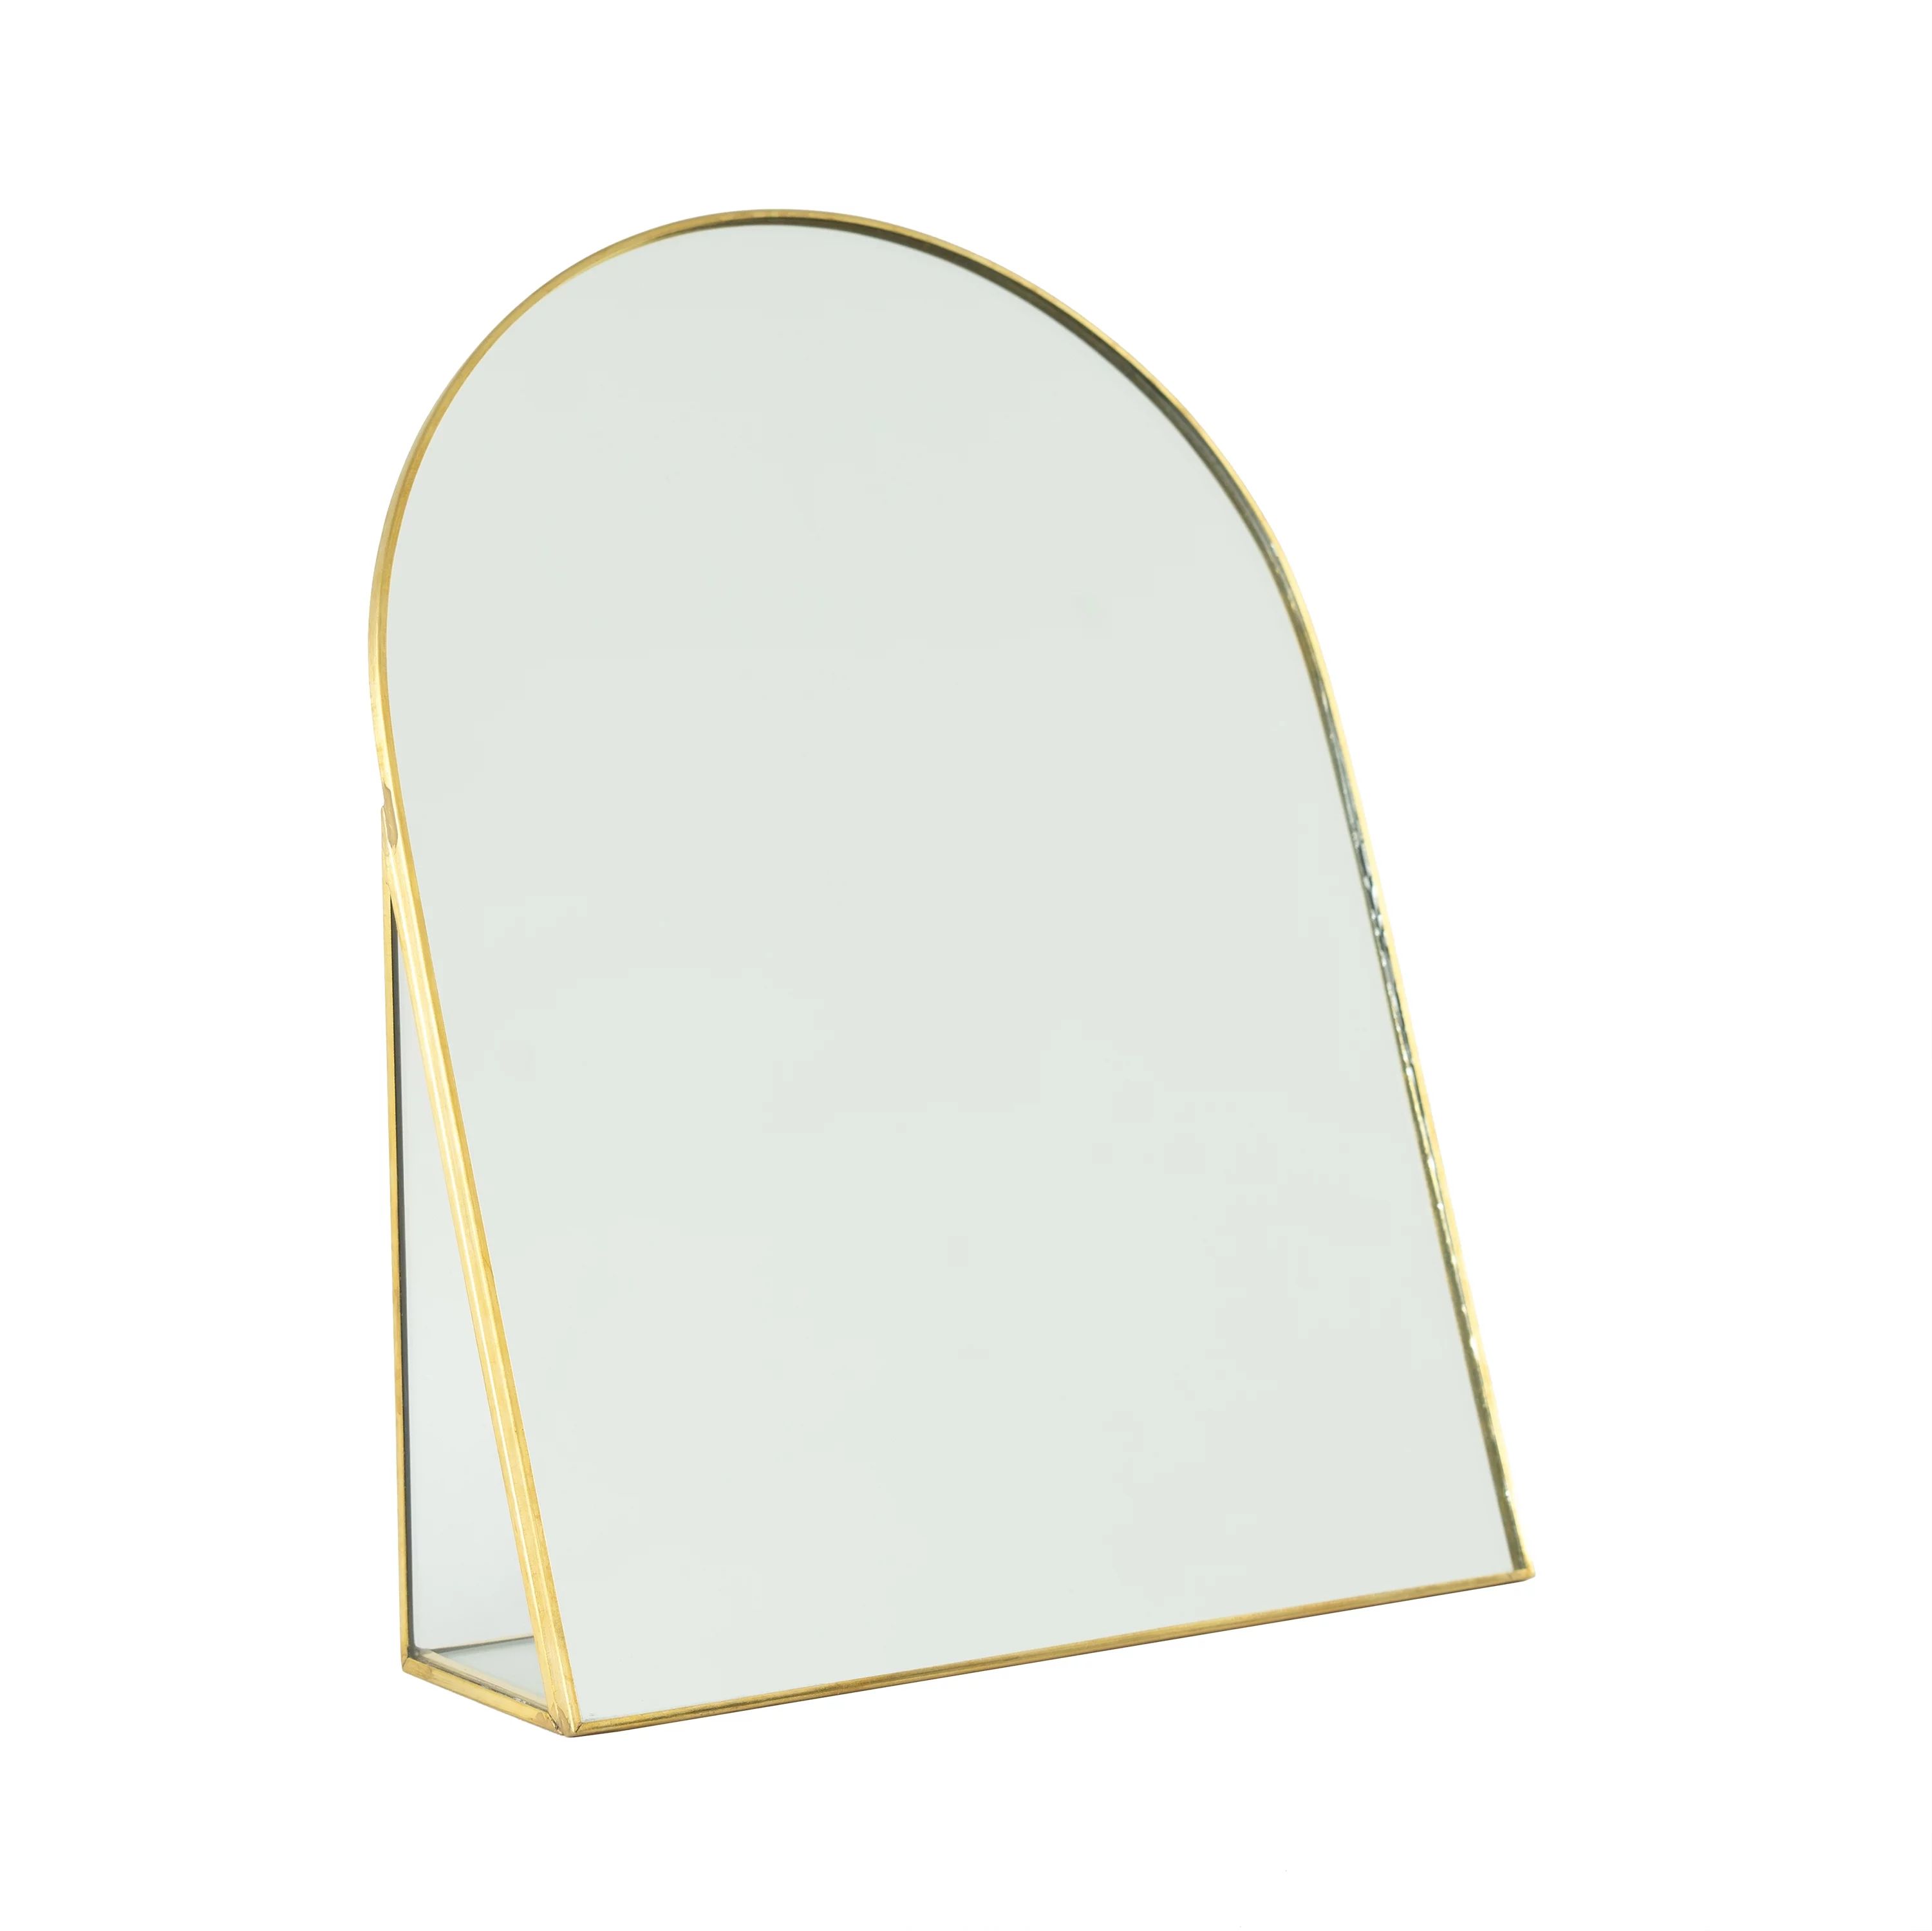 Arched Gold Metal 9.5" Decorative Slanted Tabletop Mirror | Walmart (US)